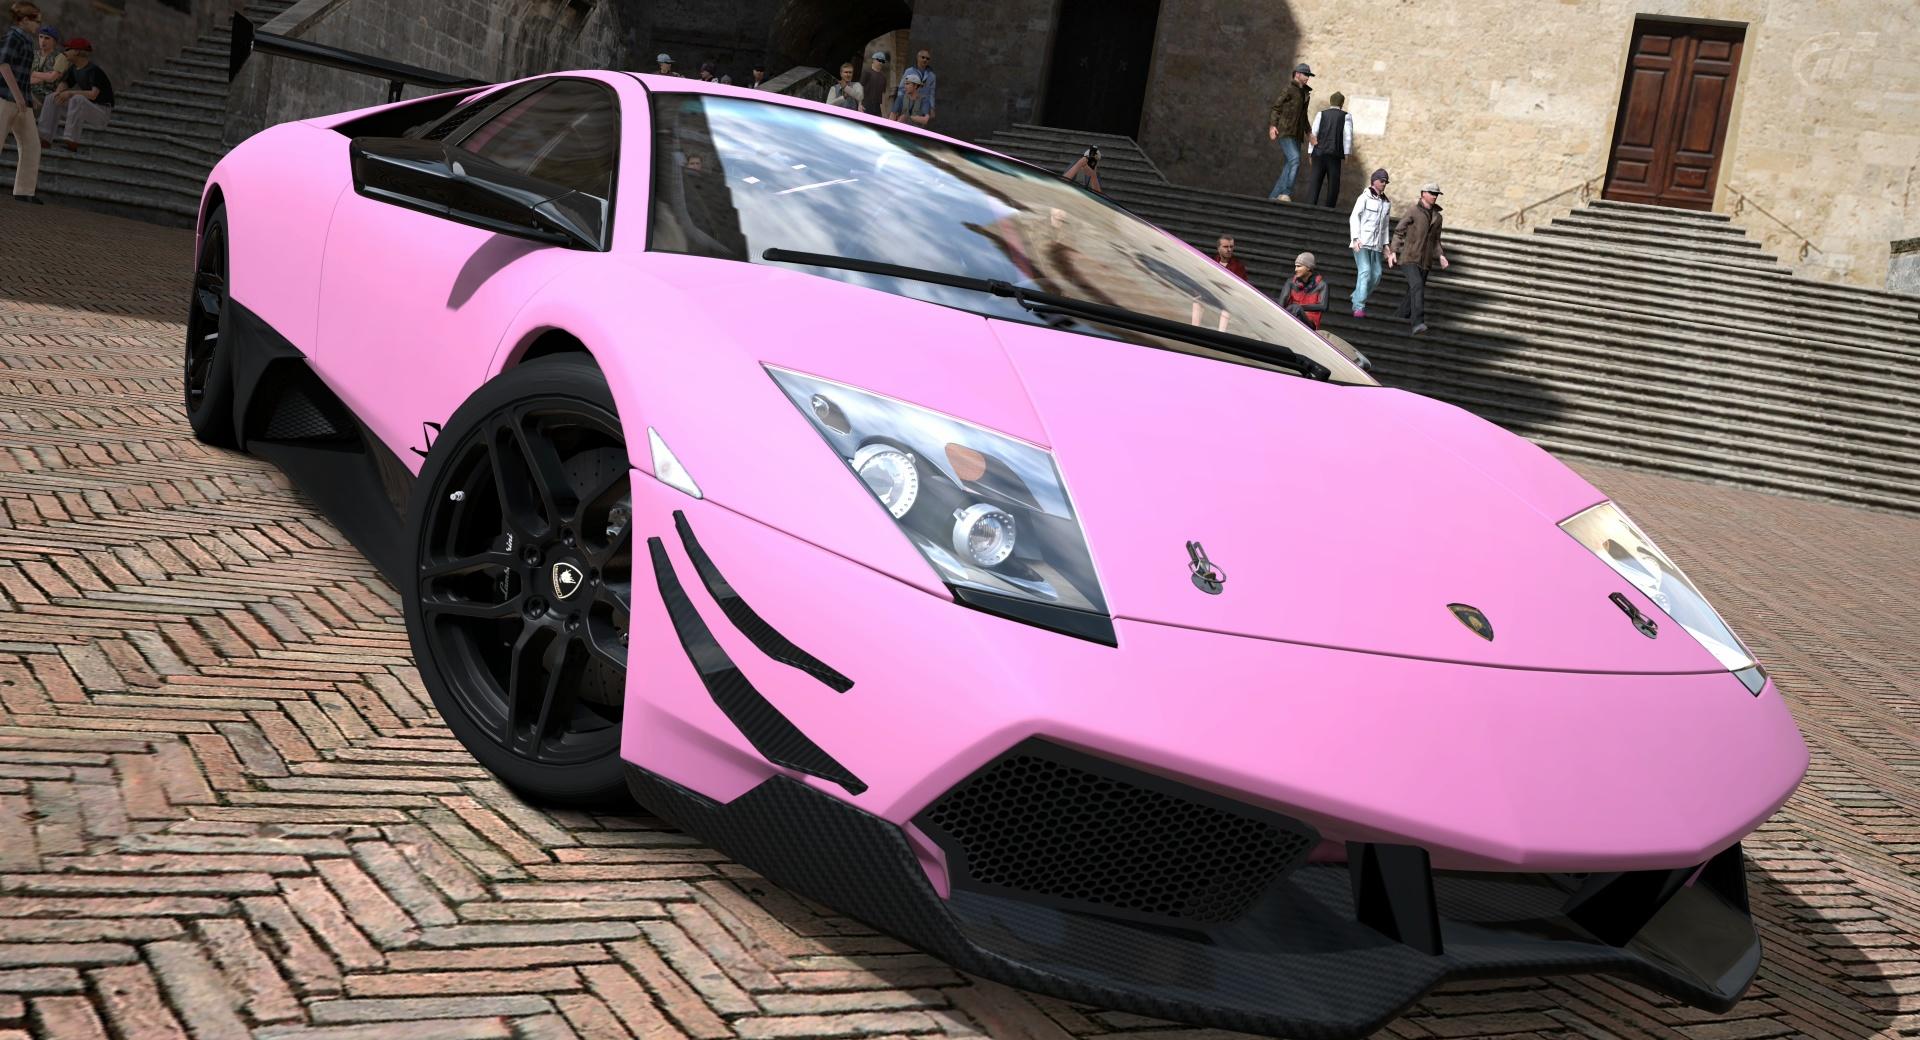 Lamborghini Murcielago LP670-4 SV Matte Pink at 2048 x 2048 iPad size wallpapers HD quality